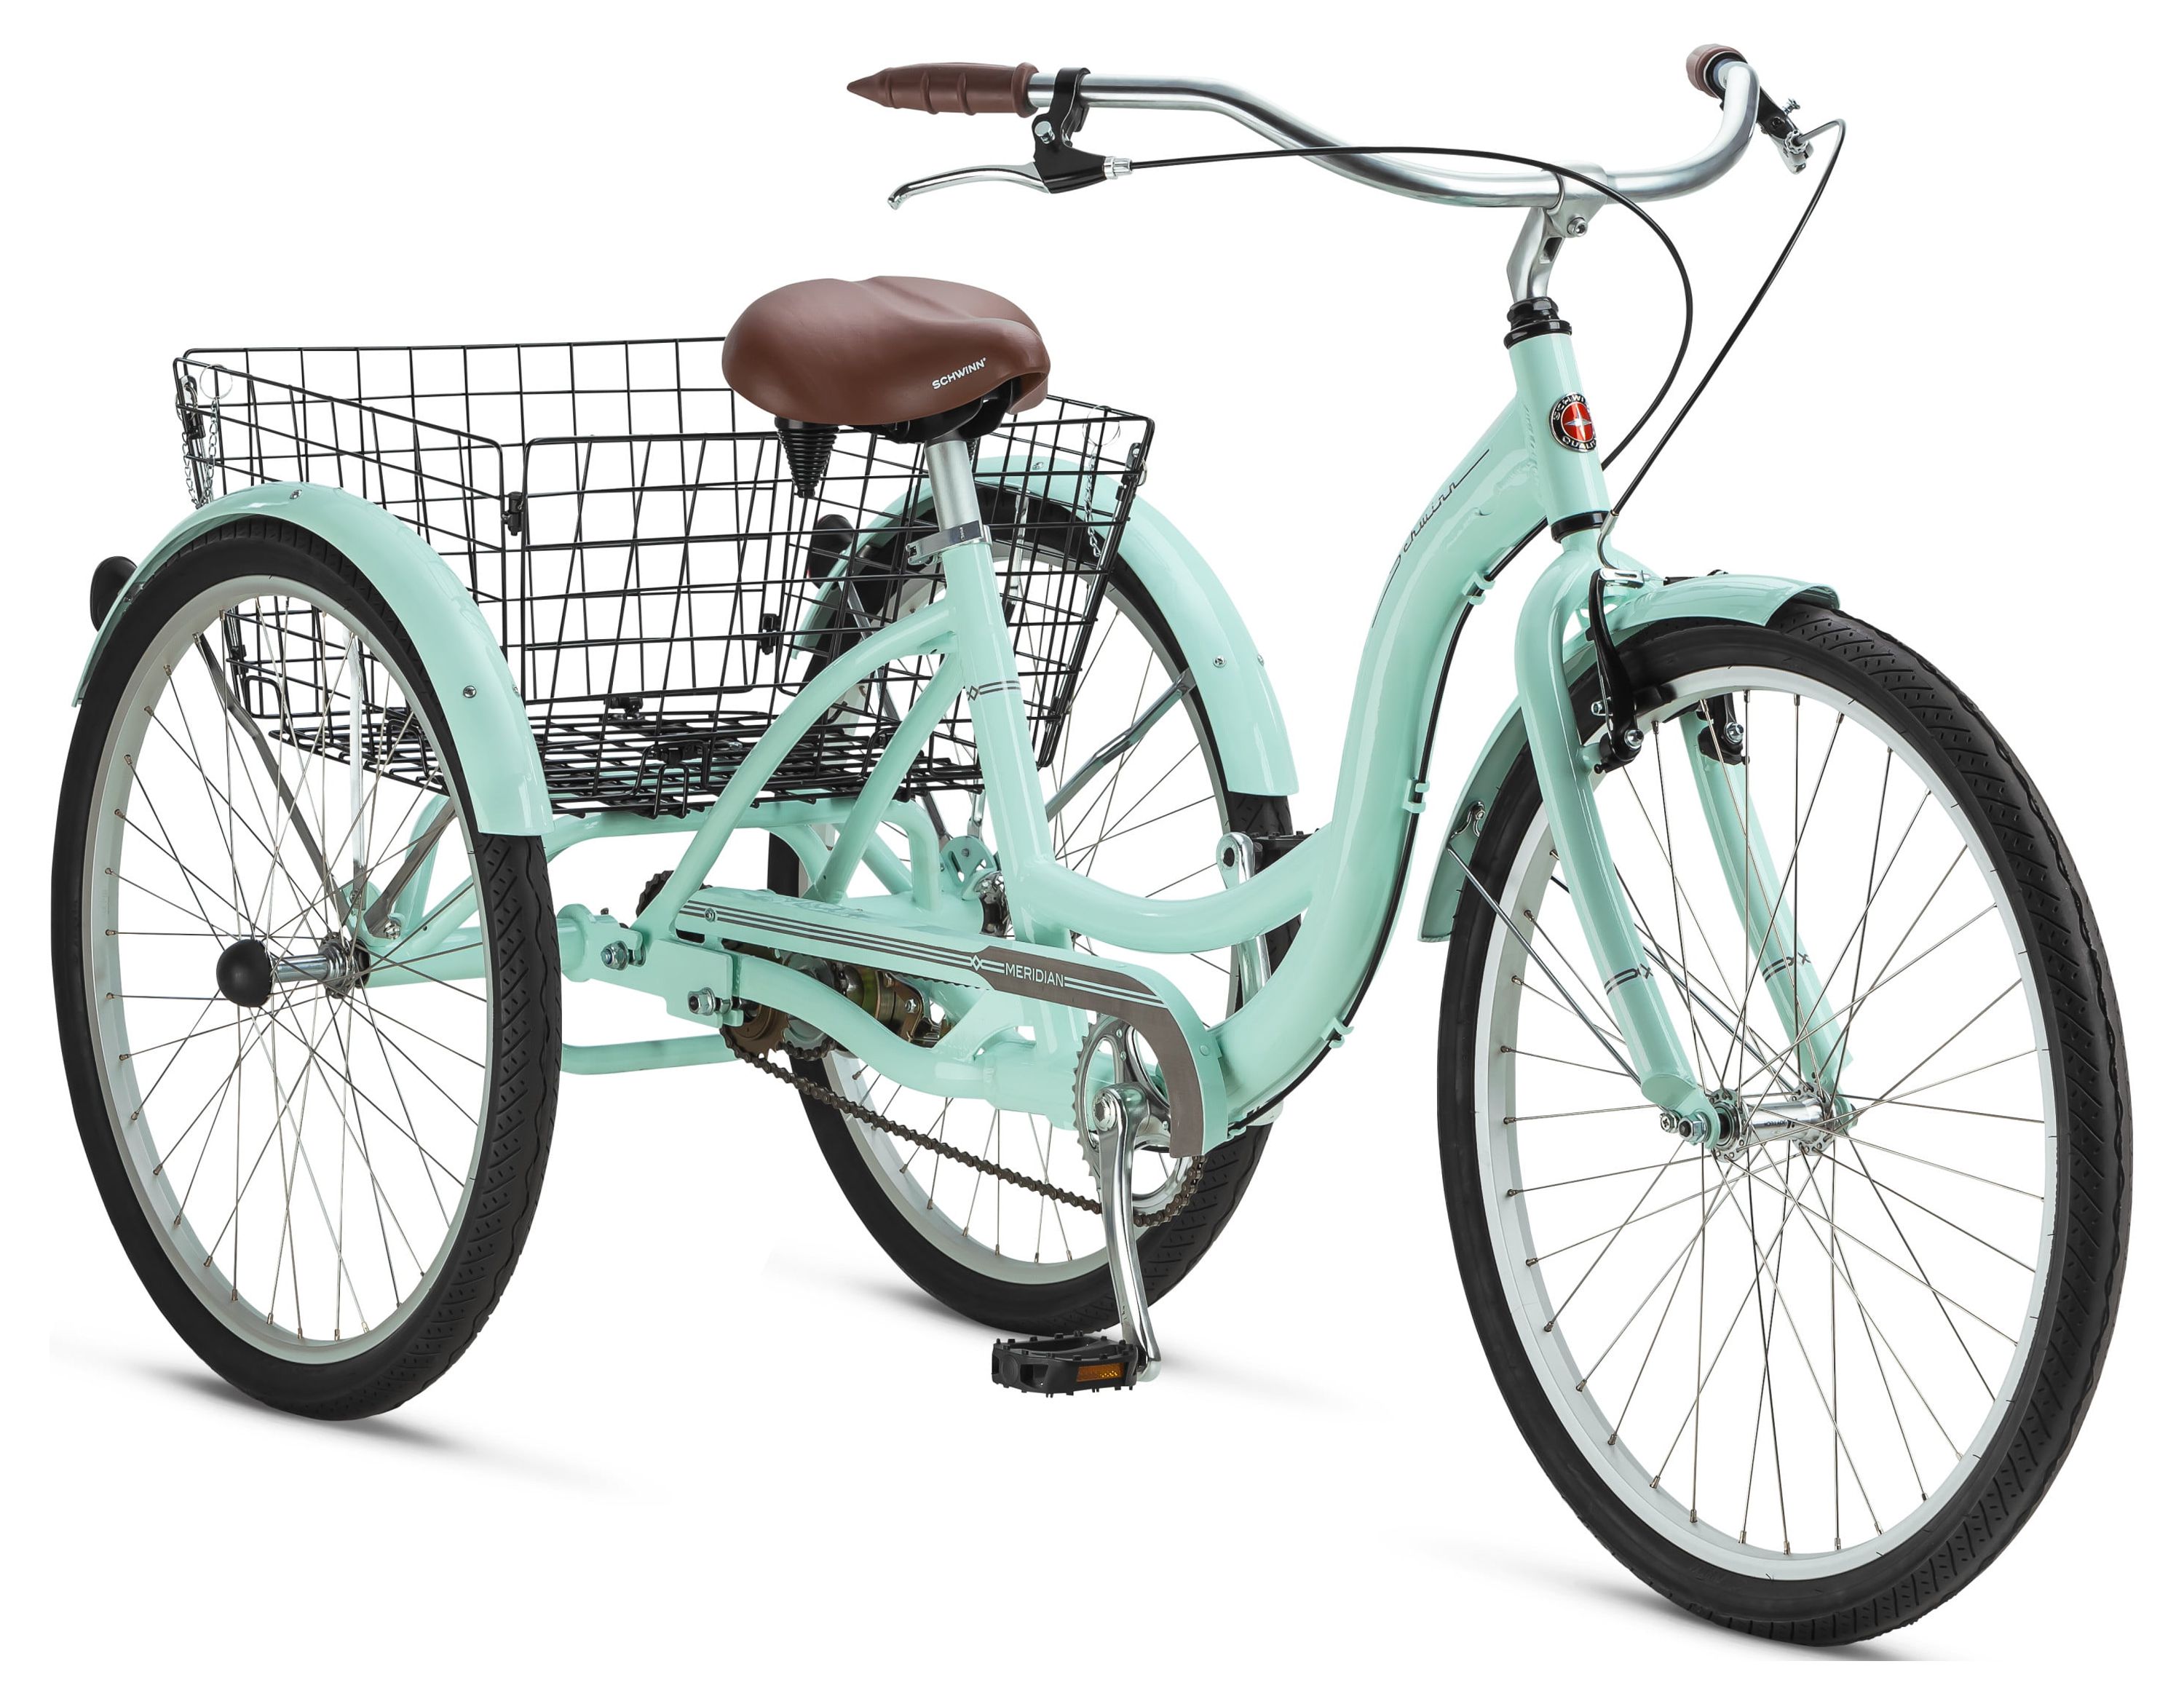 Schwinn Meridian Adult Tricycle, 26-inch Wheels, Rear Storage Basket, Mint - image 1 of 8